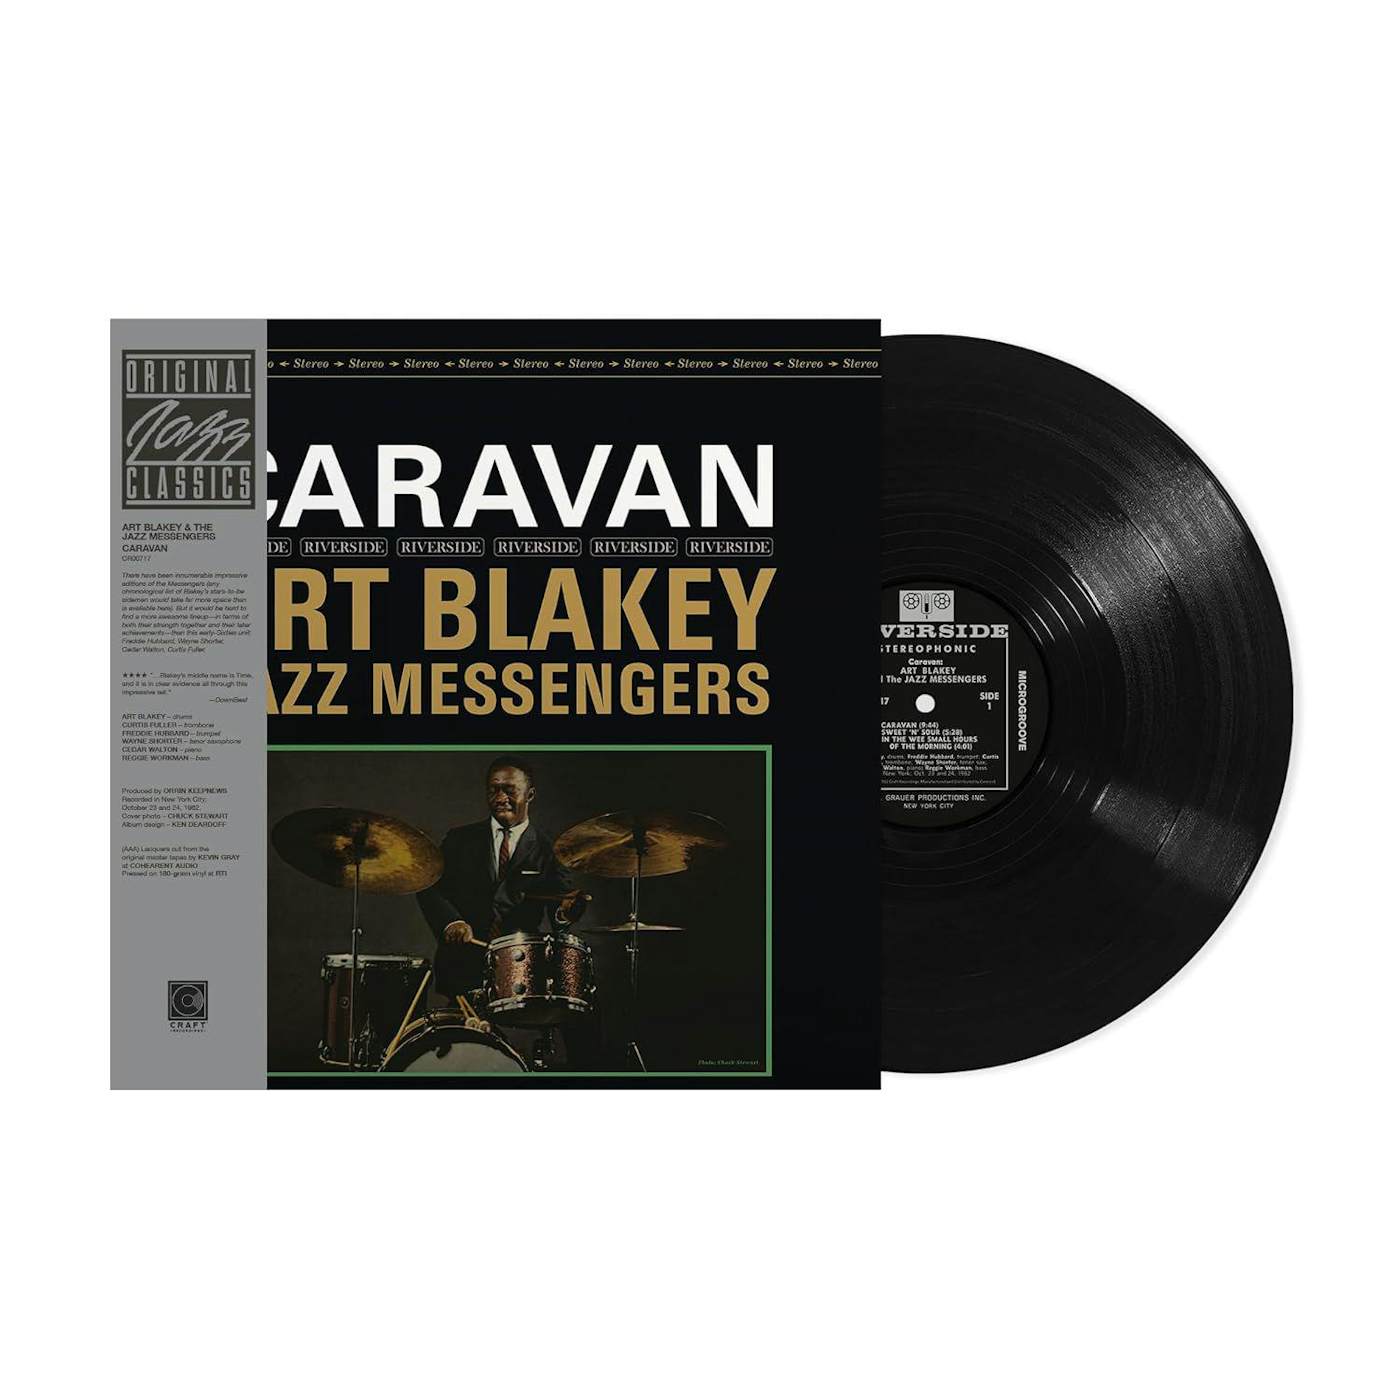 Art Blakey & The Jazz Messengers CARAVAN (ORIGINAL JAZZ CLASSICS SERIES) Vinyl Record